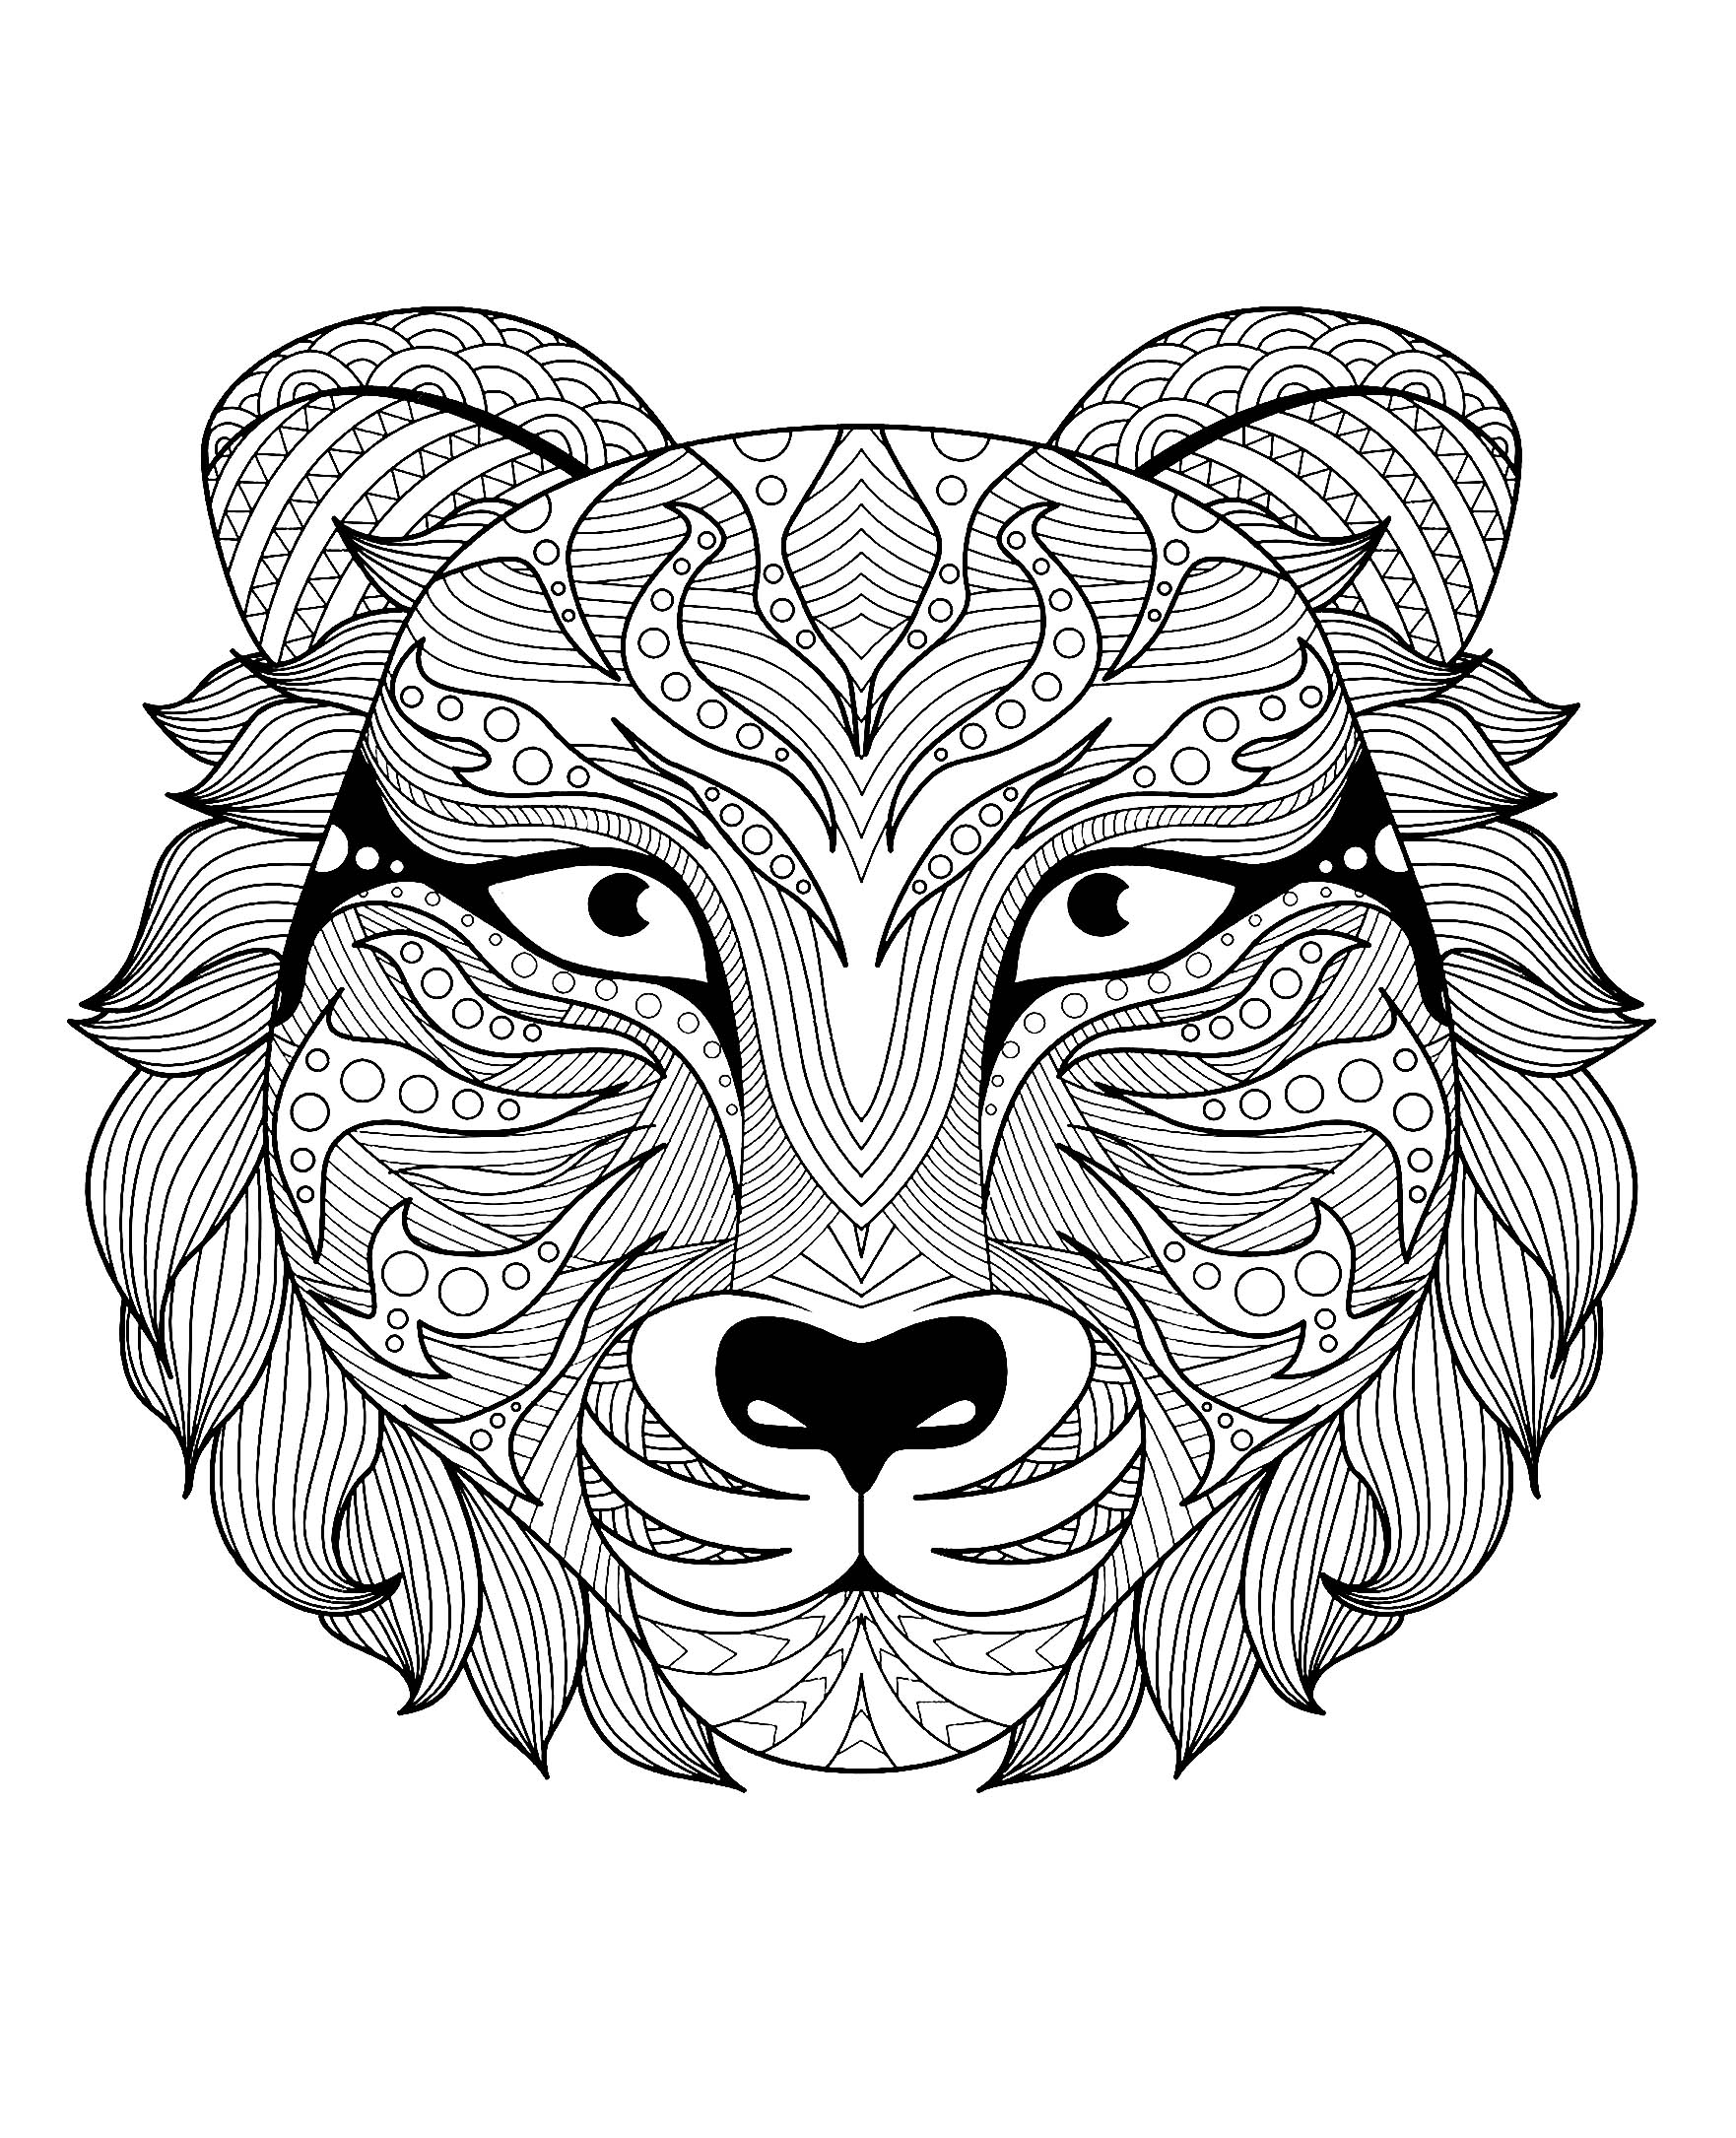 Superb tiger head, Artist : Bimdeedee   Source : 123rf